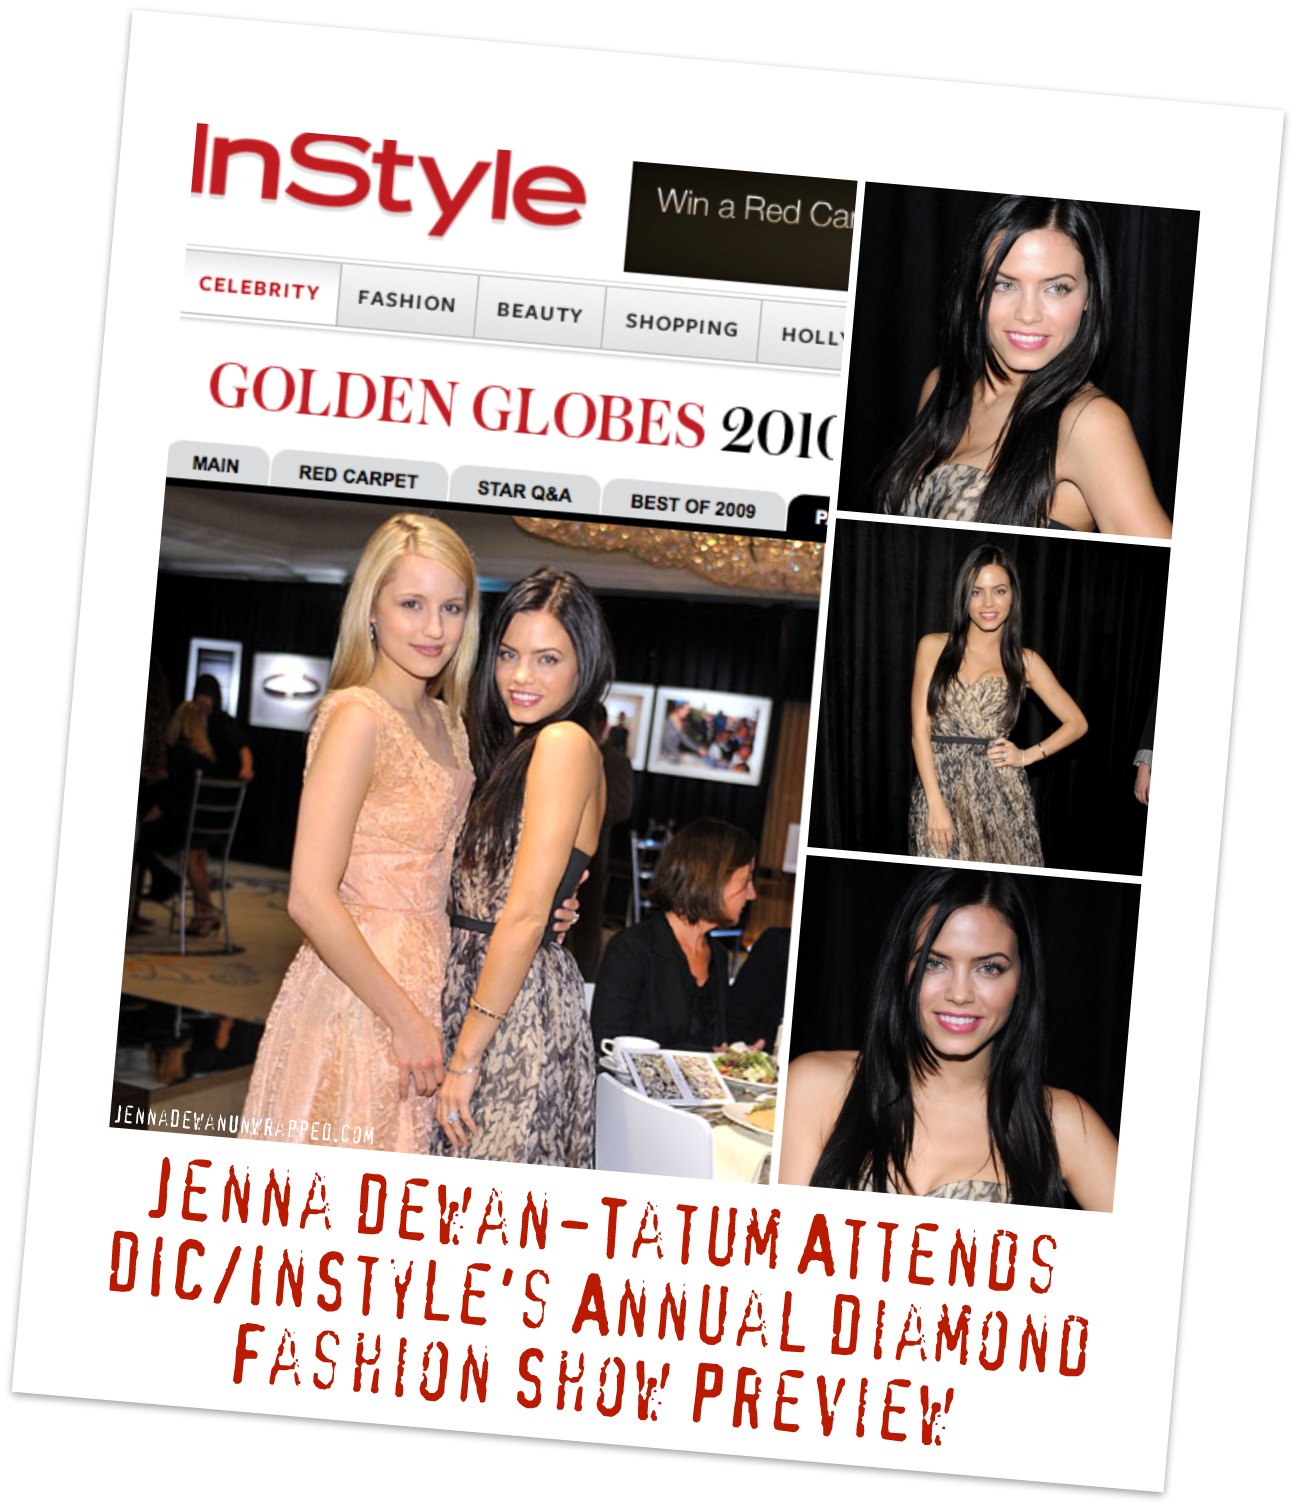 Jenna Dewan-Tatum Sparkles at InStyle’s Diamond Fashion Show Preview